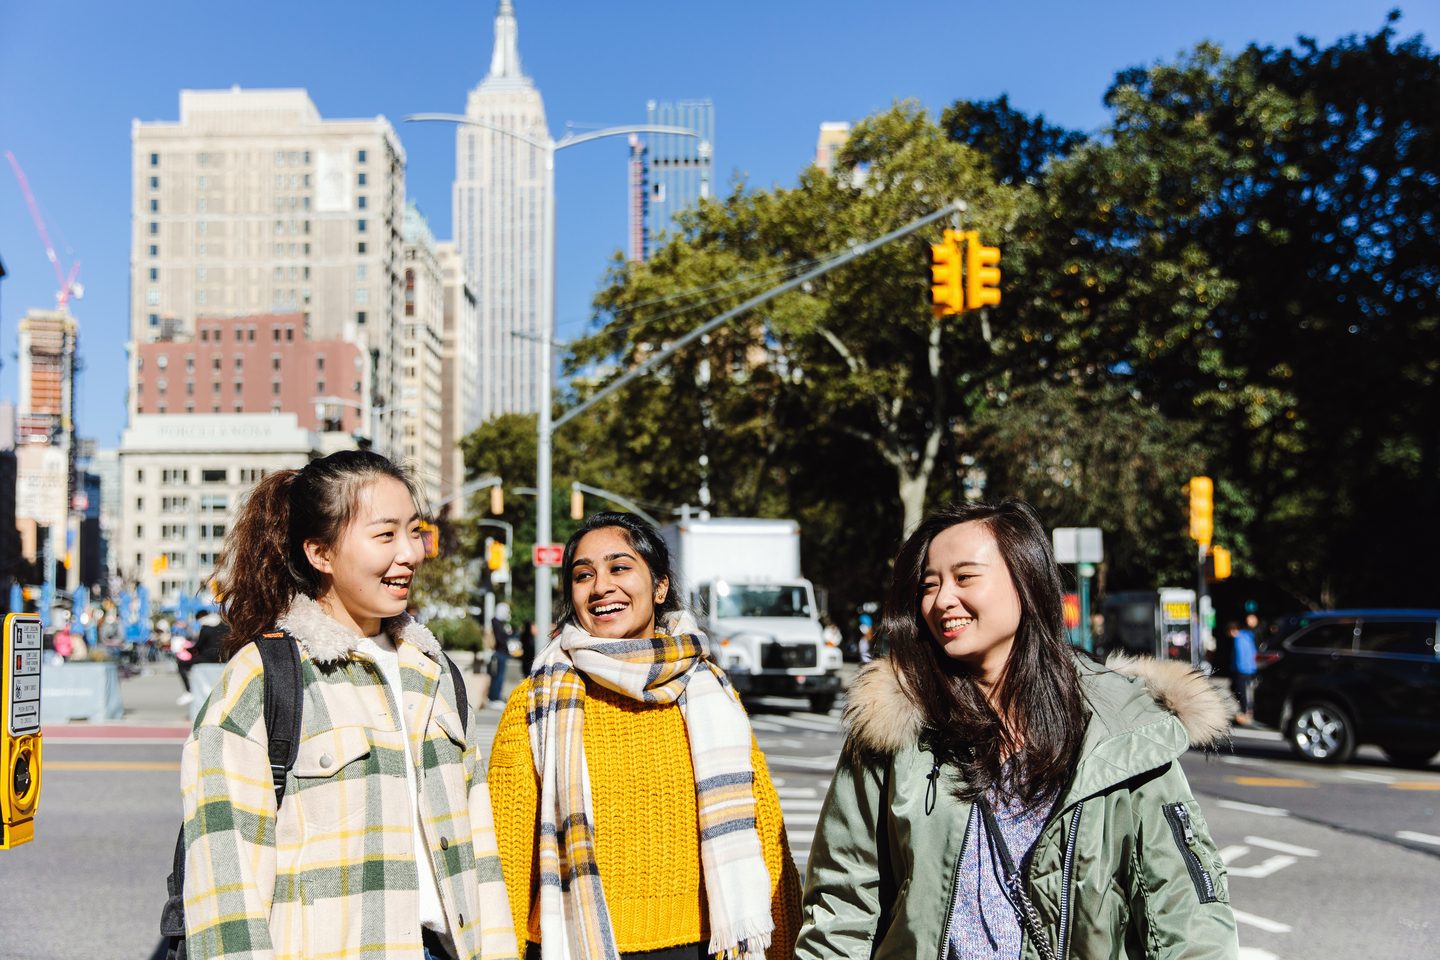 Three Pace University students strolling around new York